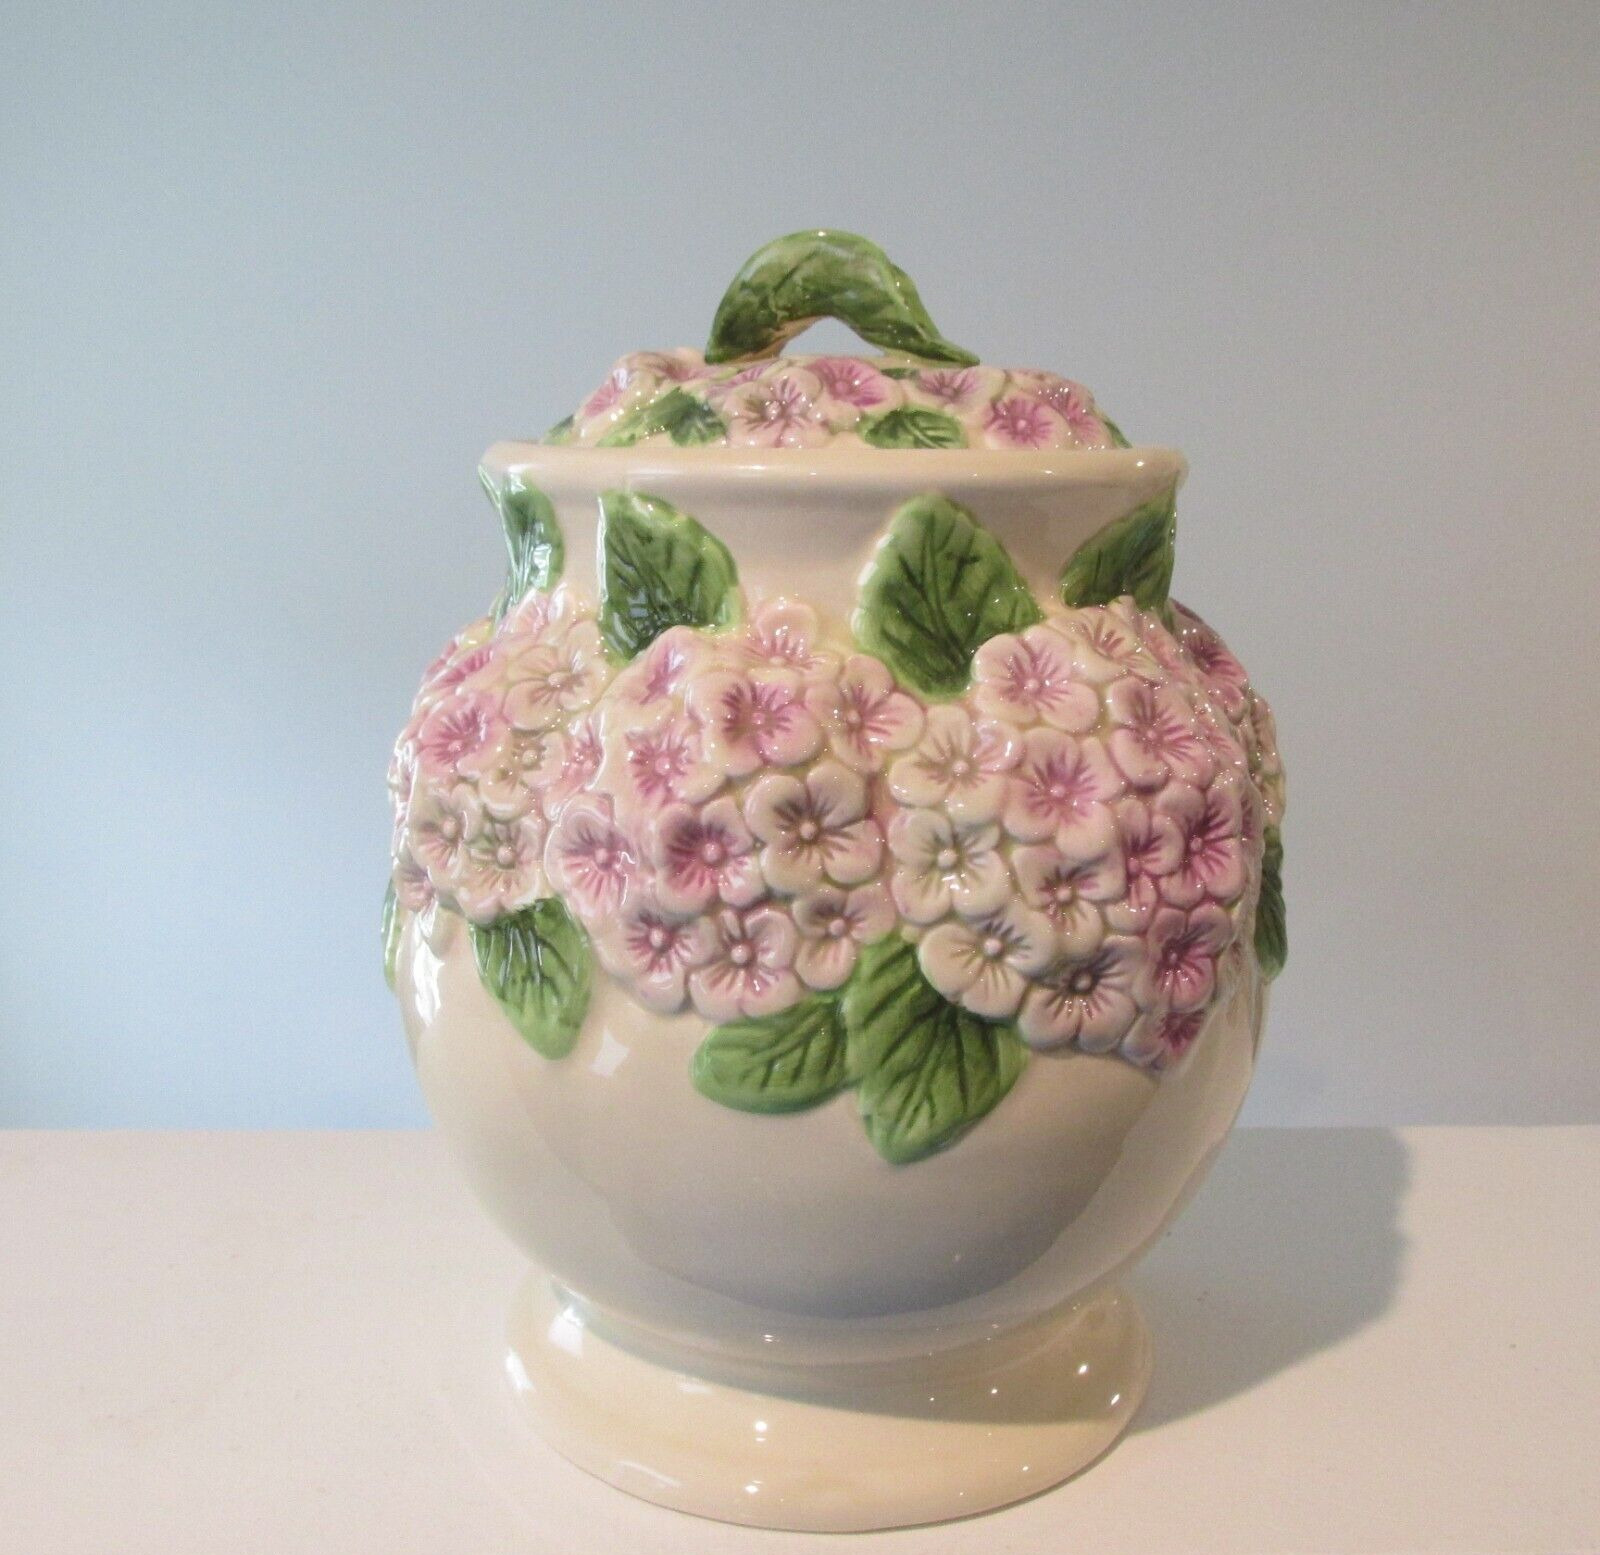 Hydrangea Floral Ceramic Canister Cookie Jar w Lid - Pink Flowers Leaf Knob